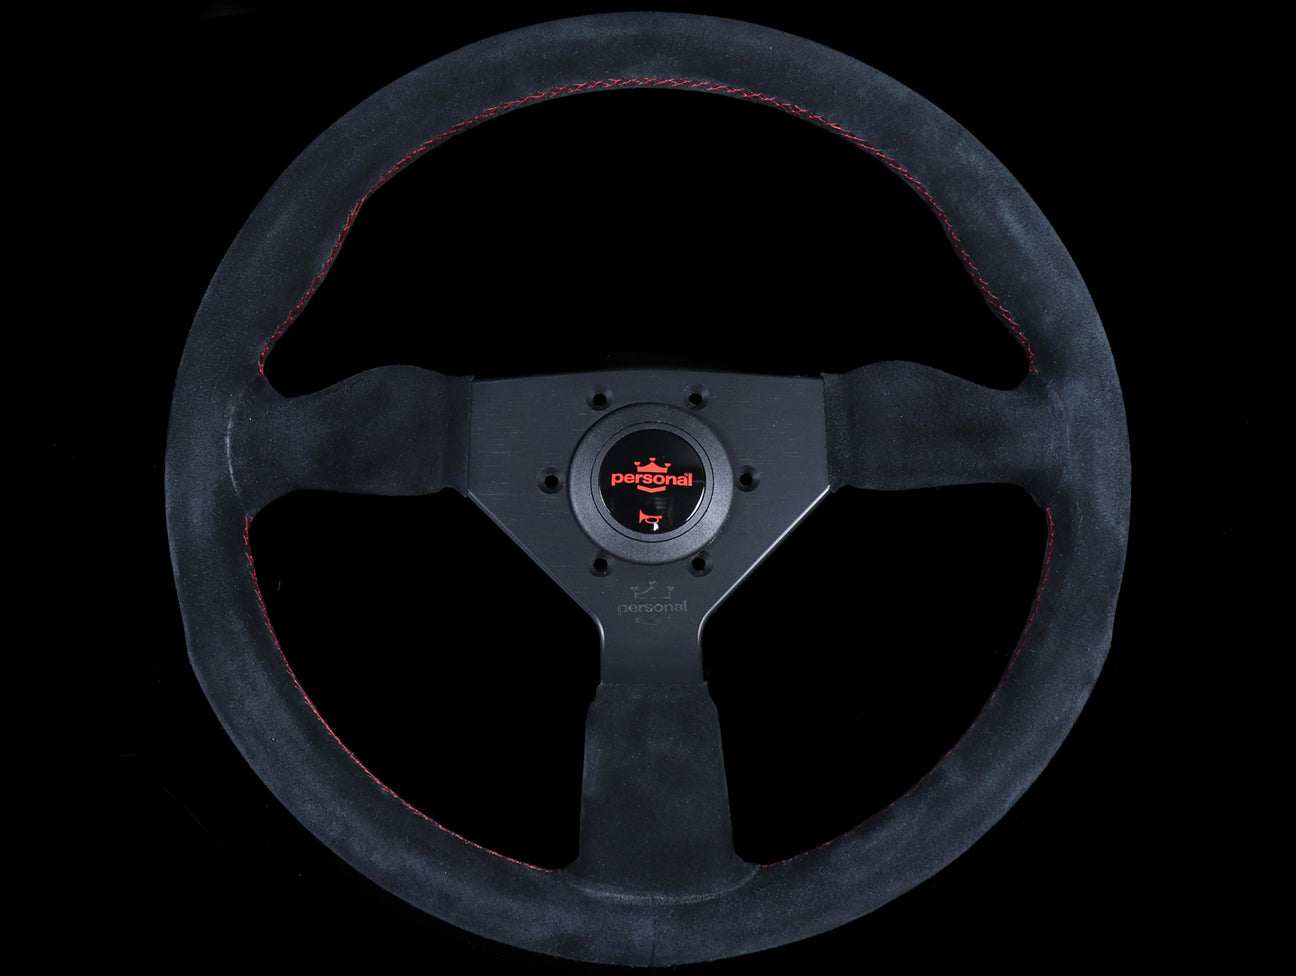 Personal Grinta 350mm Steering Wheel - Black Suede / Red Stitch